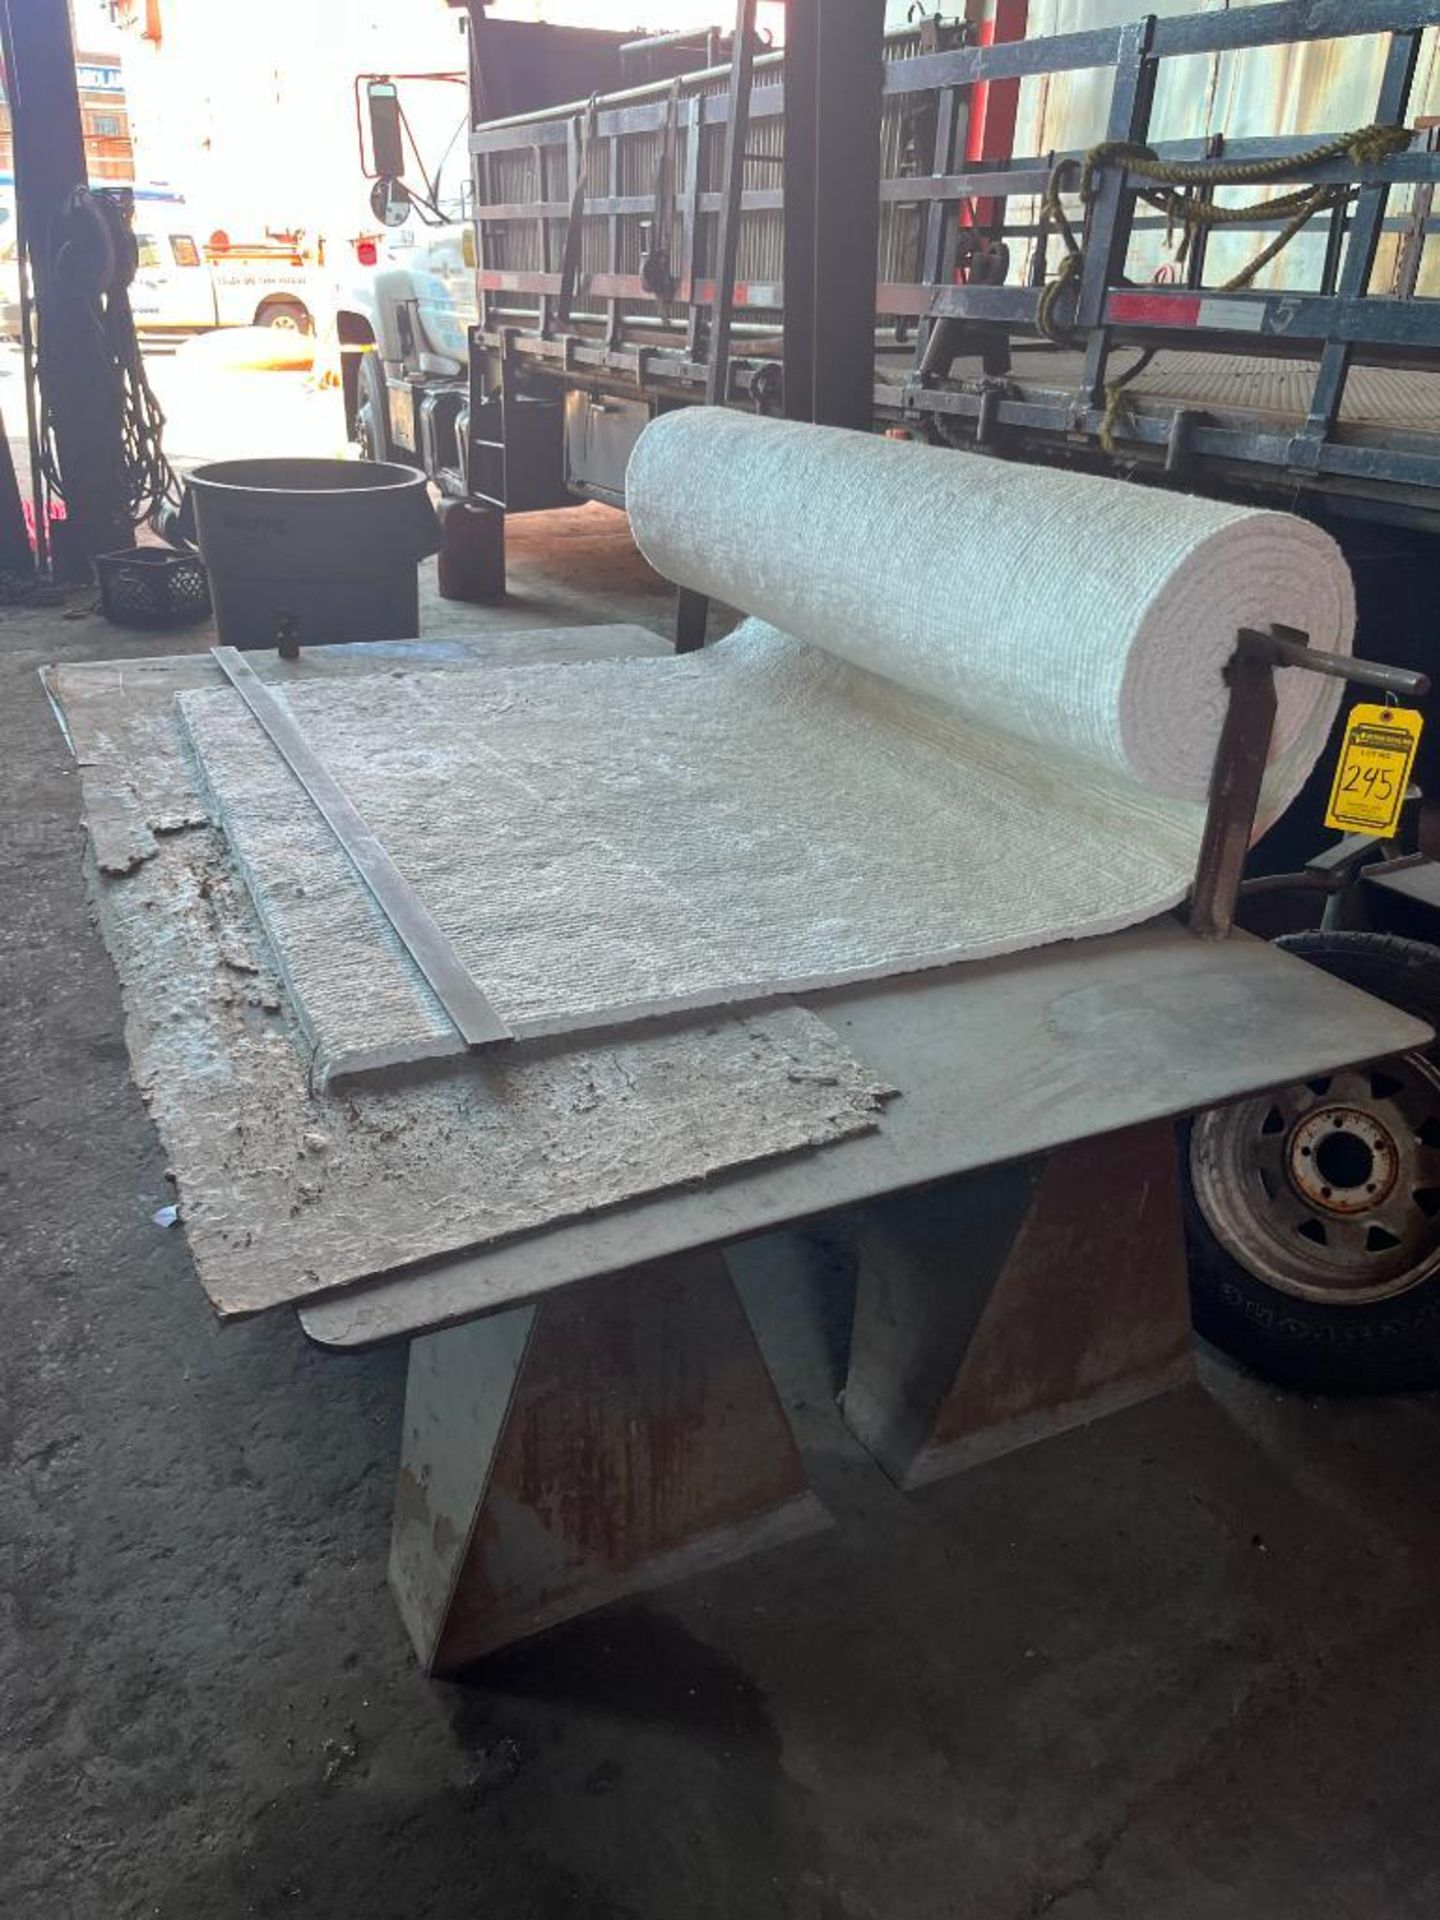 92" x 54" steel table & roll of fiberglass insulation